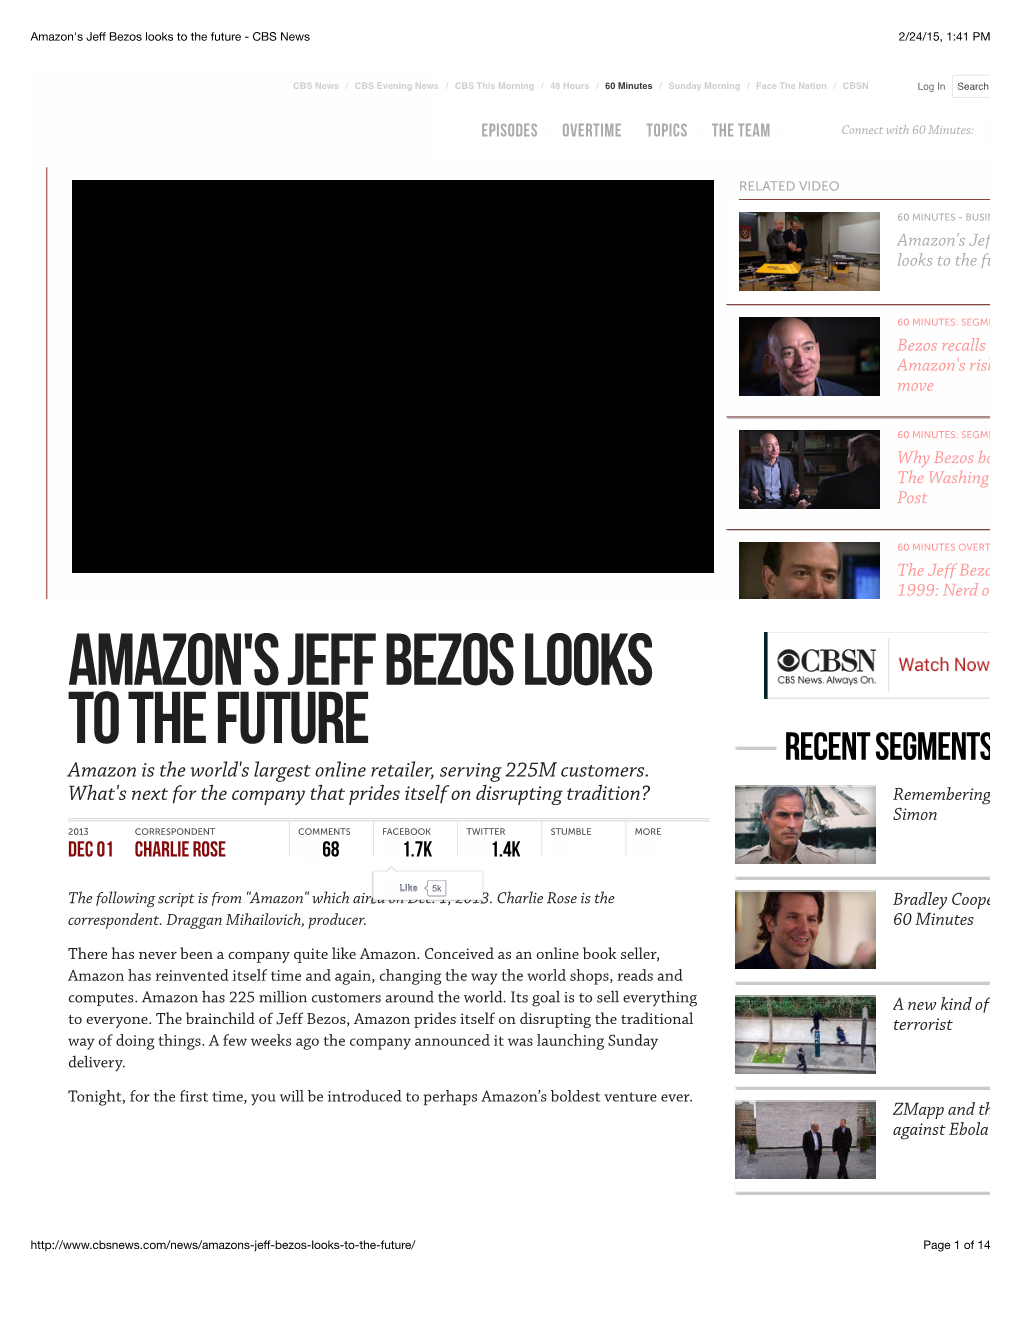 Amazon's Jeff Bezos Looks to the Future